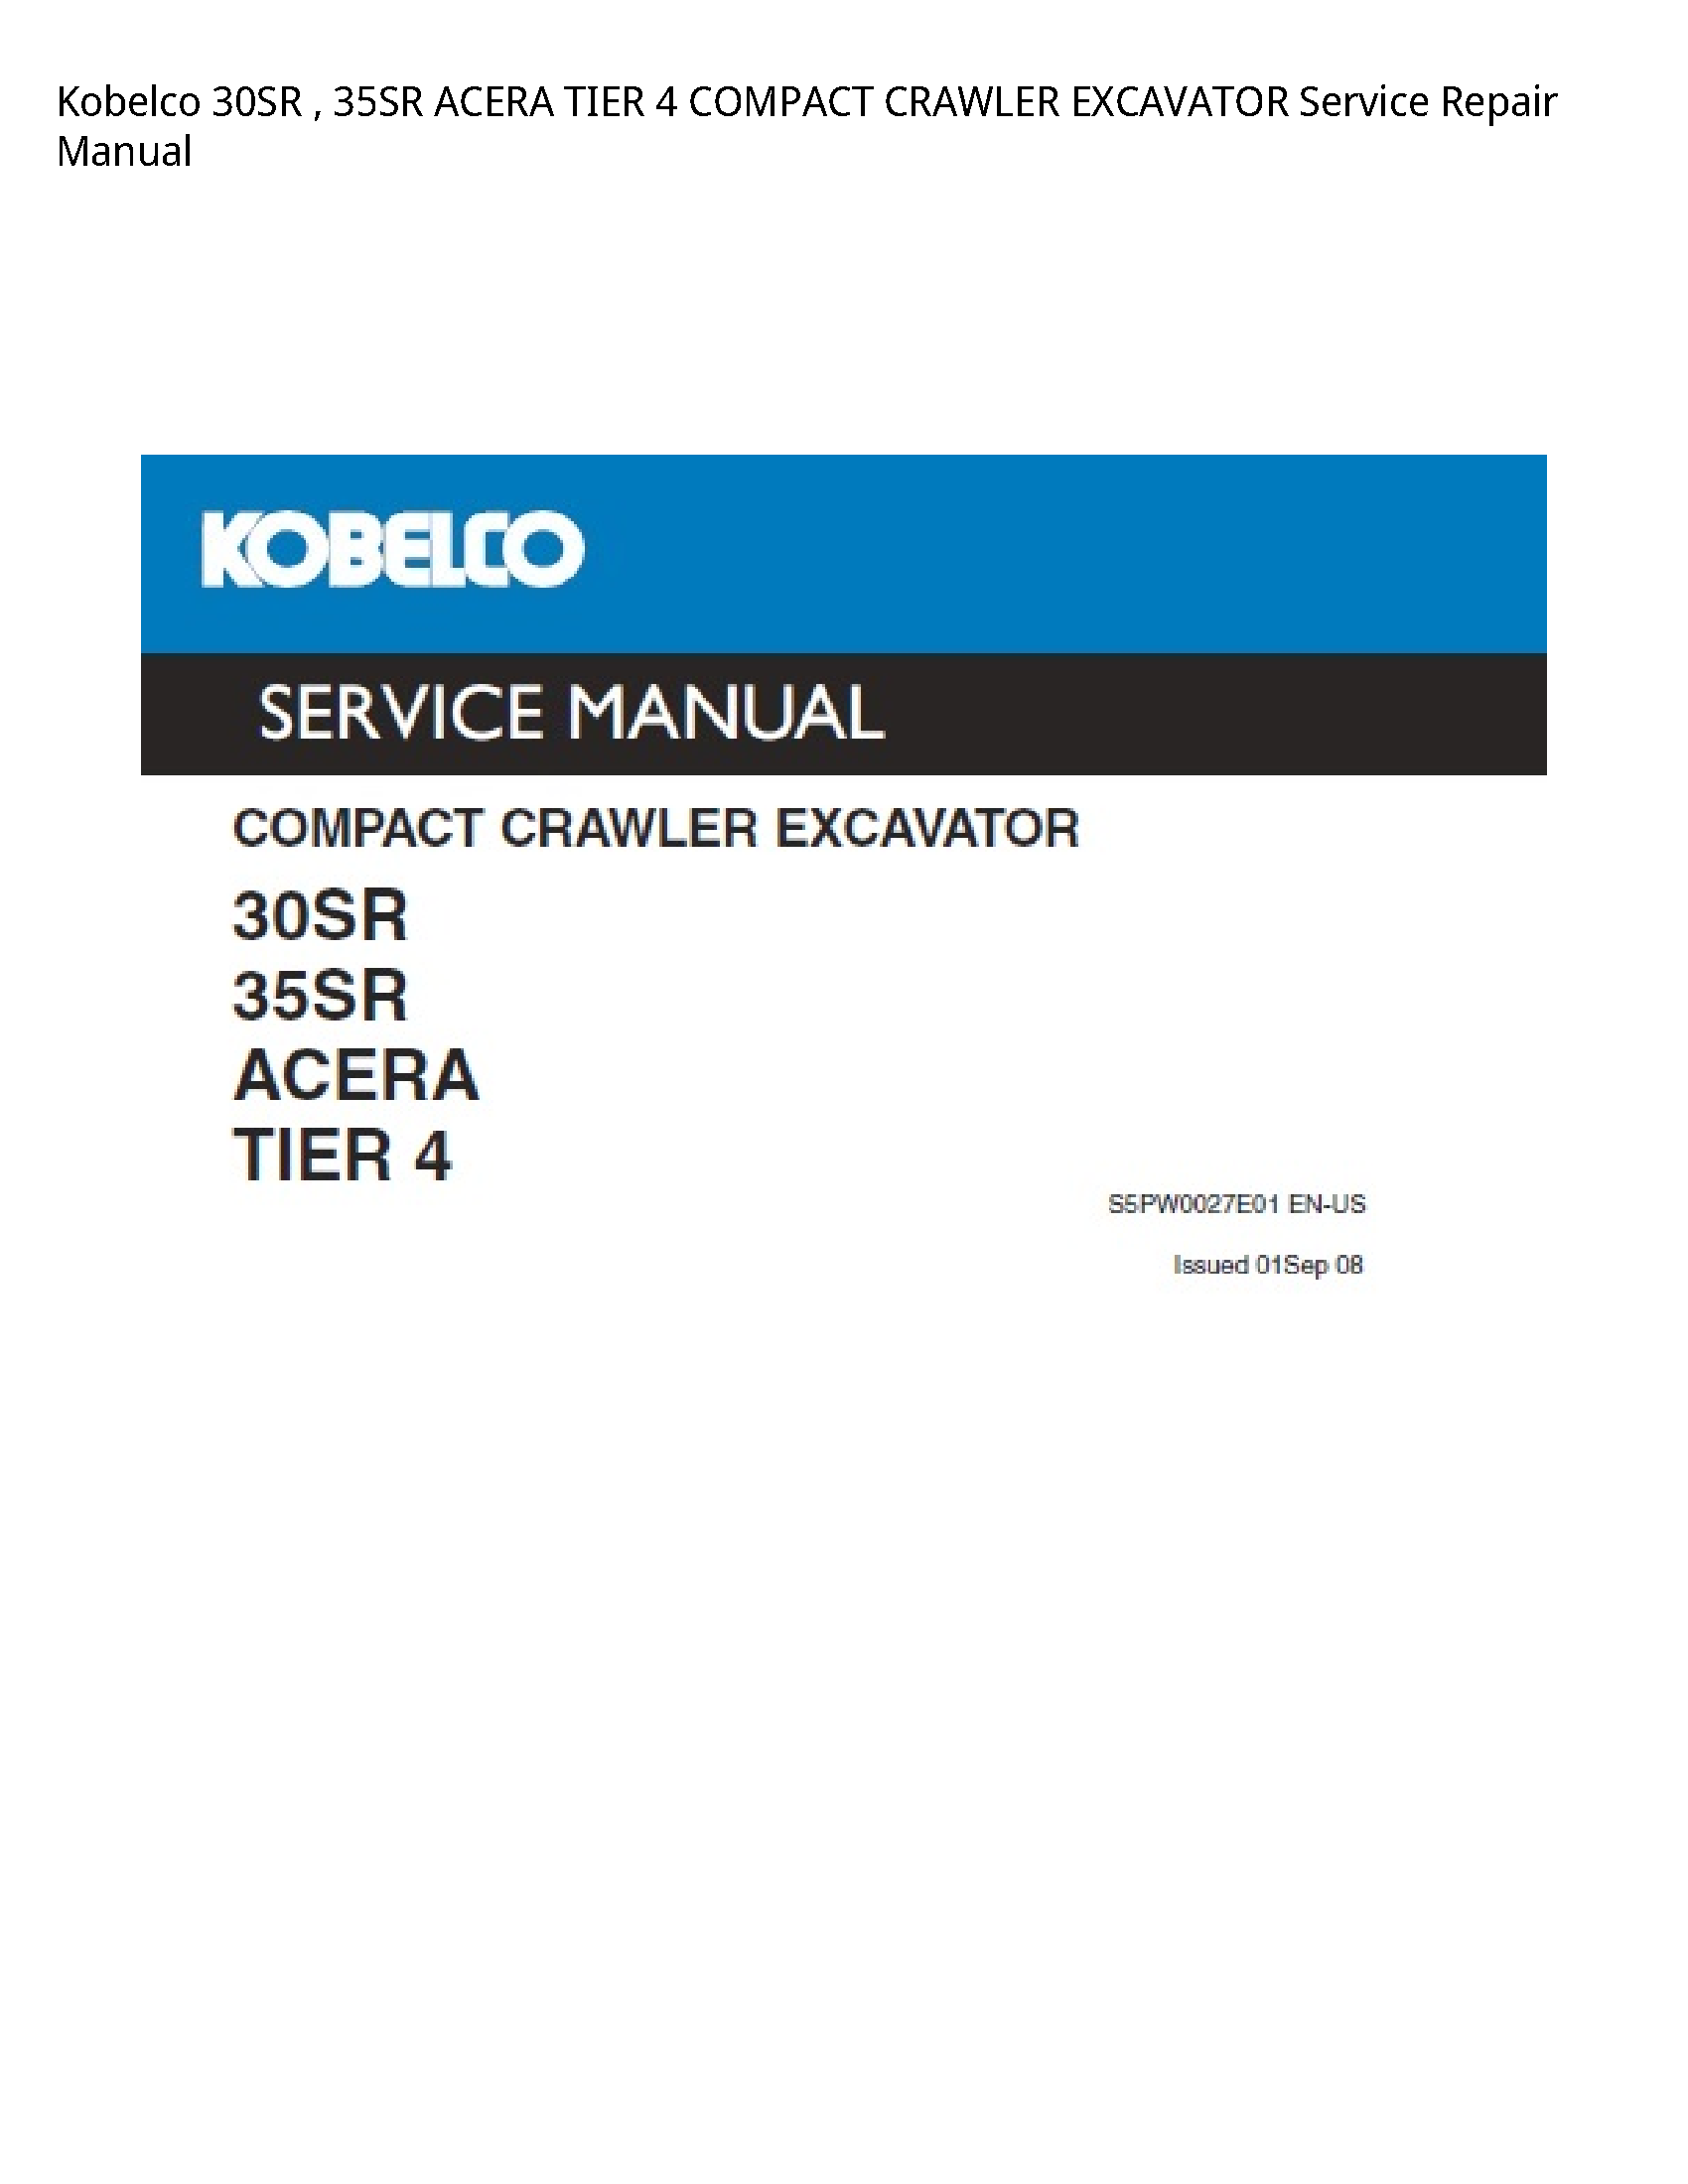 Kobelco 30SR ACERA TIER COMPACT CRAWLER EXCAVATOR manual